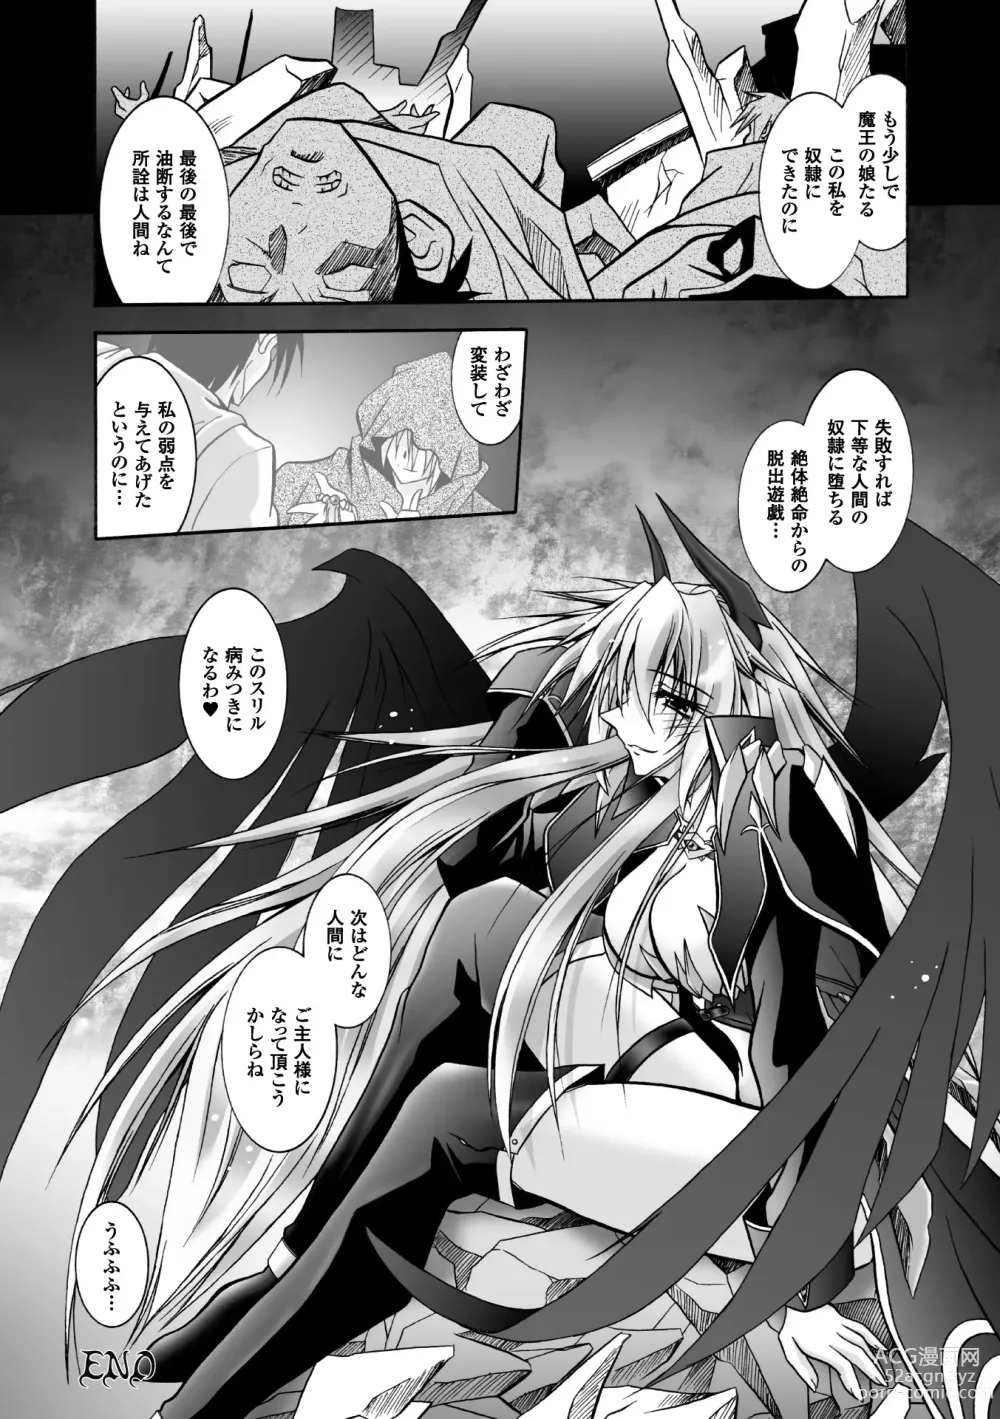 Page 24 of manga Datenshi-tachi no Chinkonka - Fallen Angels Requiem